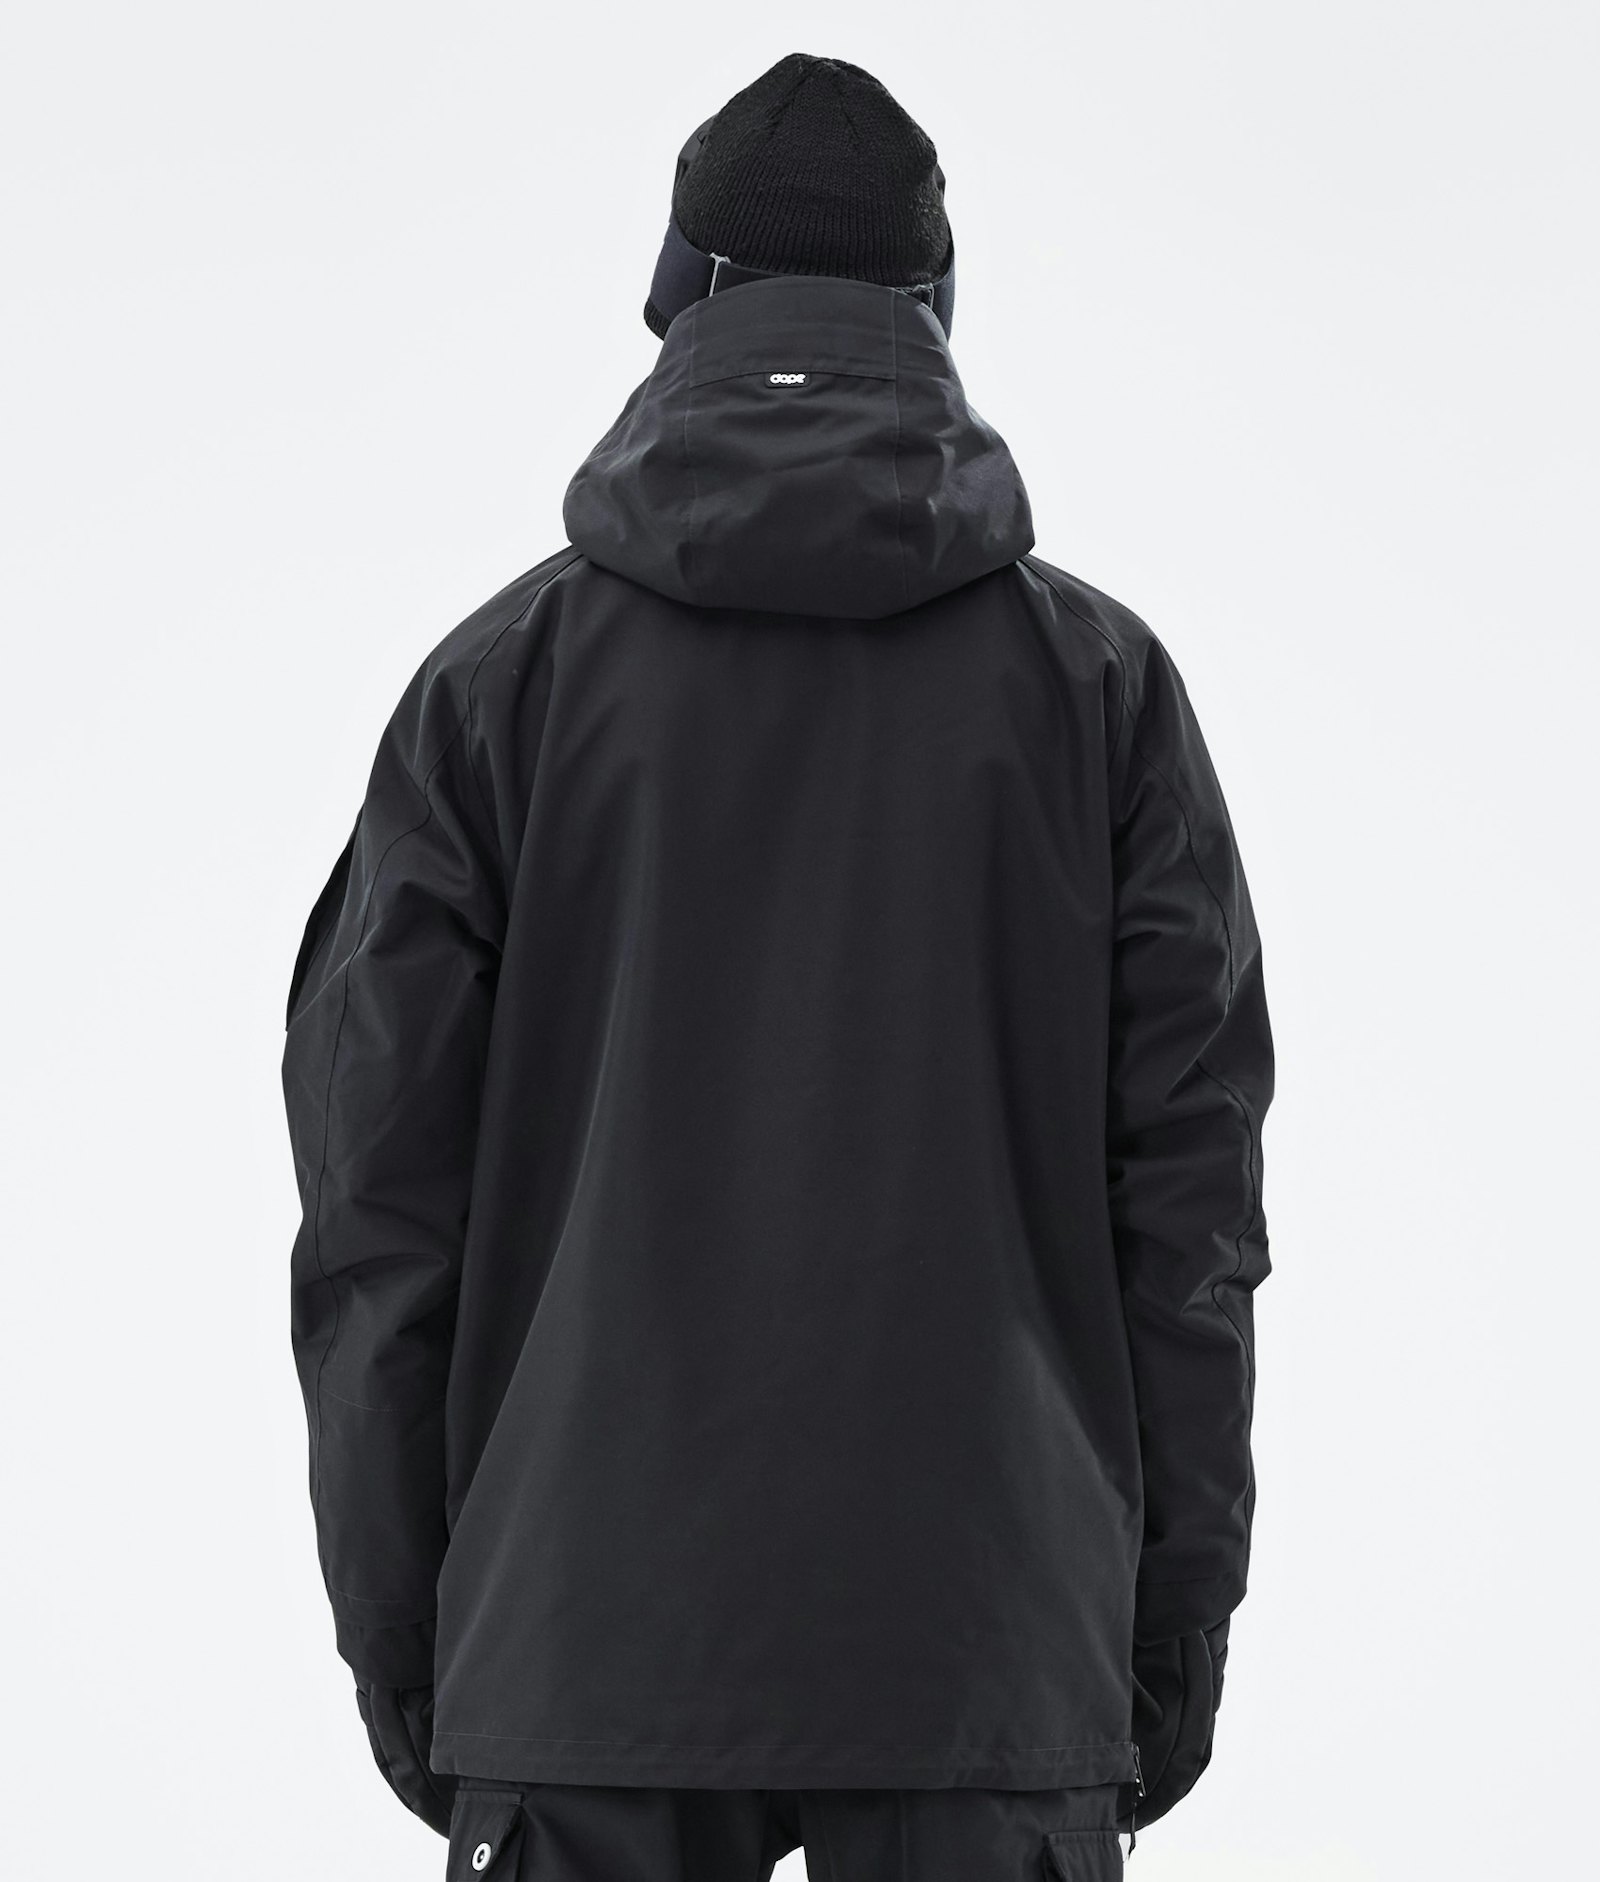 Annok 2021 Snowboard Jacket Men Black